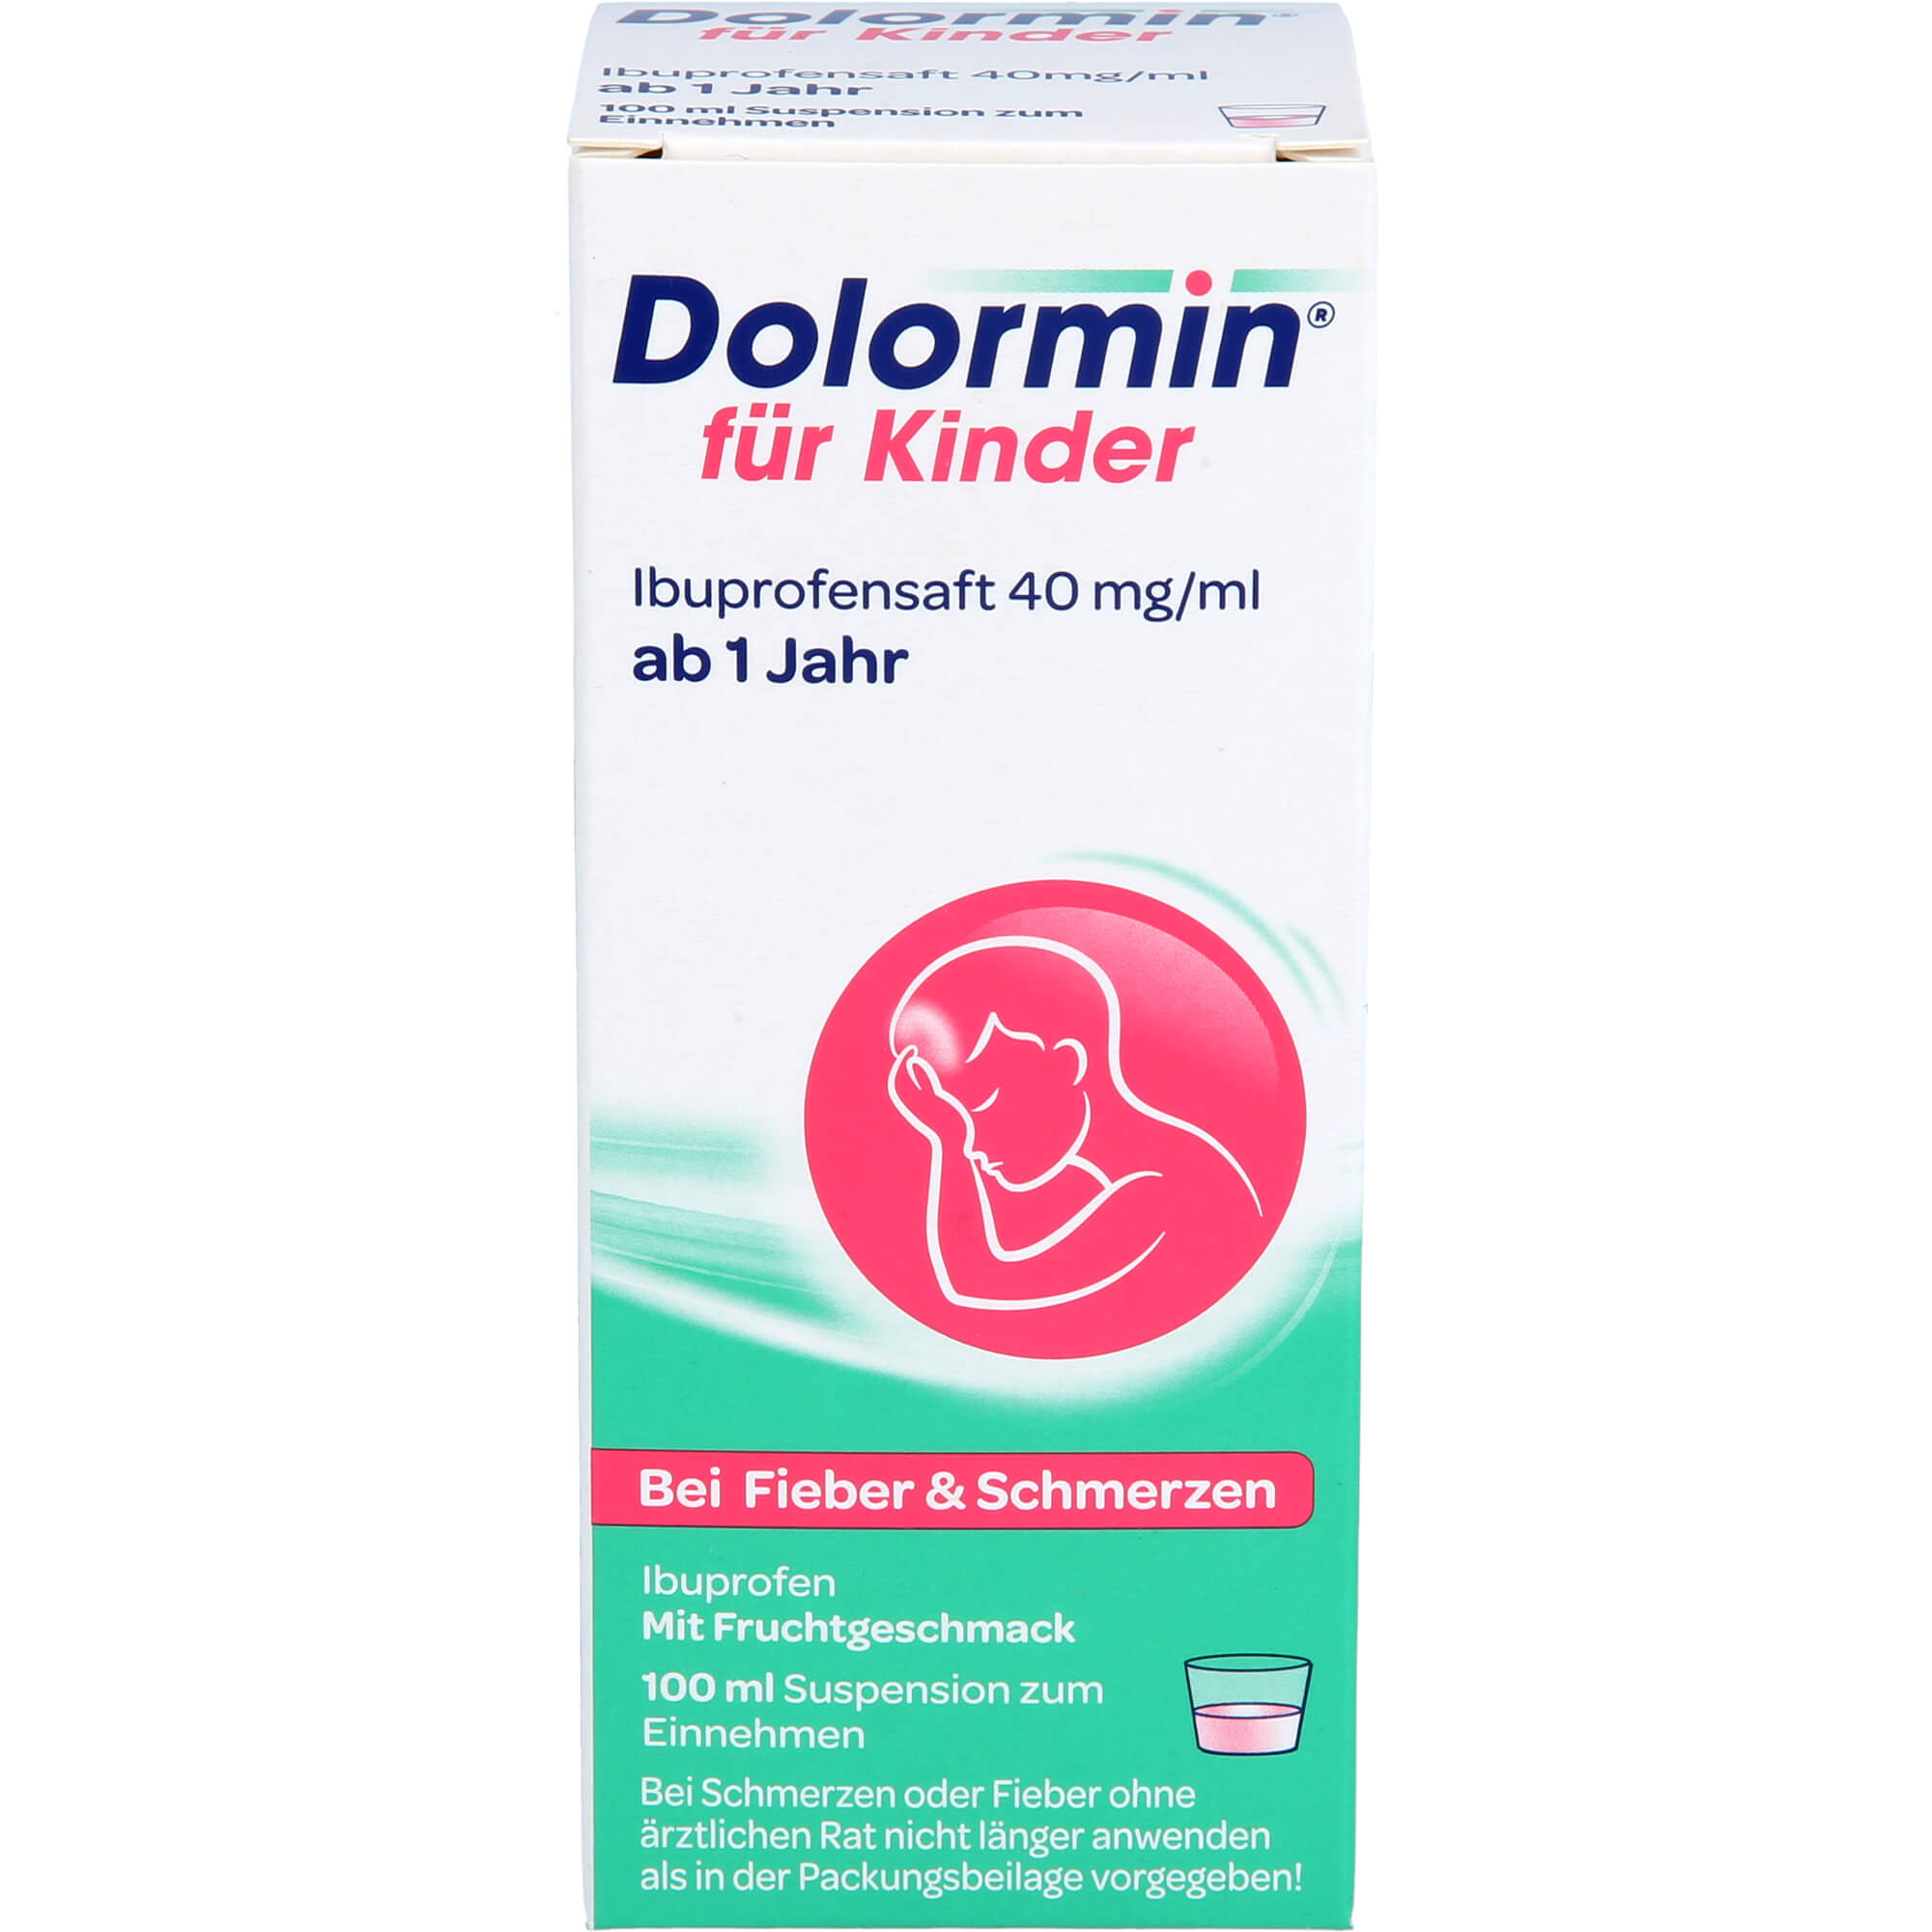 DOLORMIN-fuer-Kinder-Ibuprofensaft-40-mg-ml-Susp